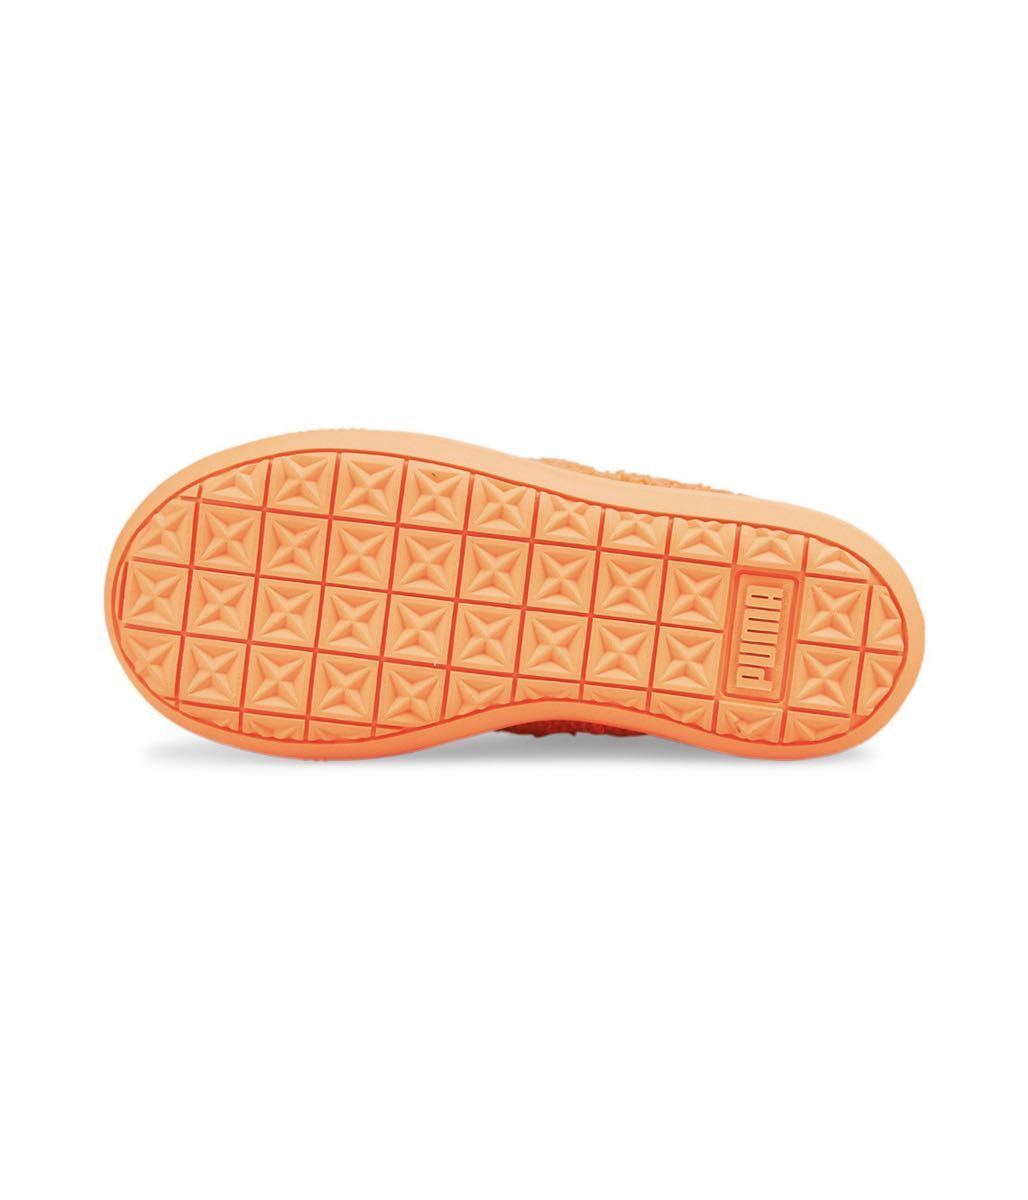  новый товар PUMA Puma wi мужской замша mayu туфли без застежки teti22.5cm orange * без коробки . отправка 